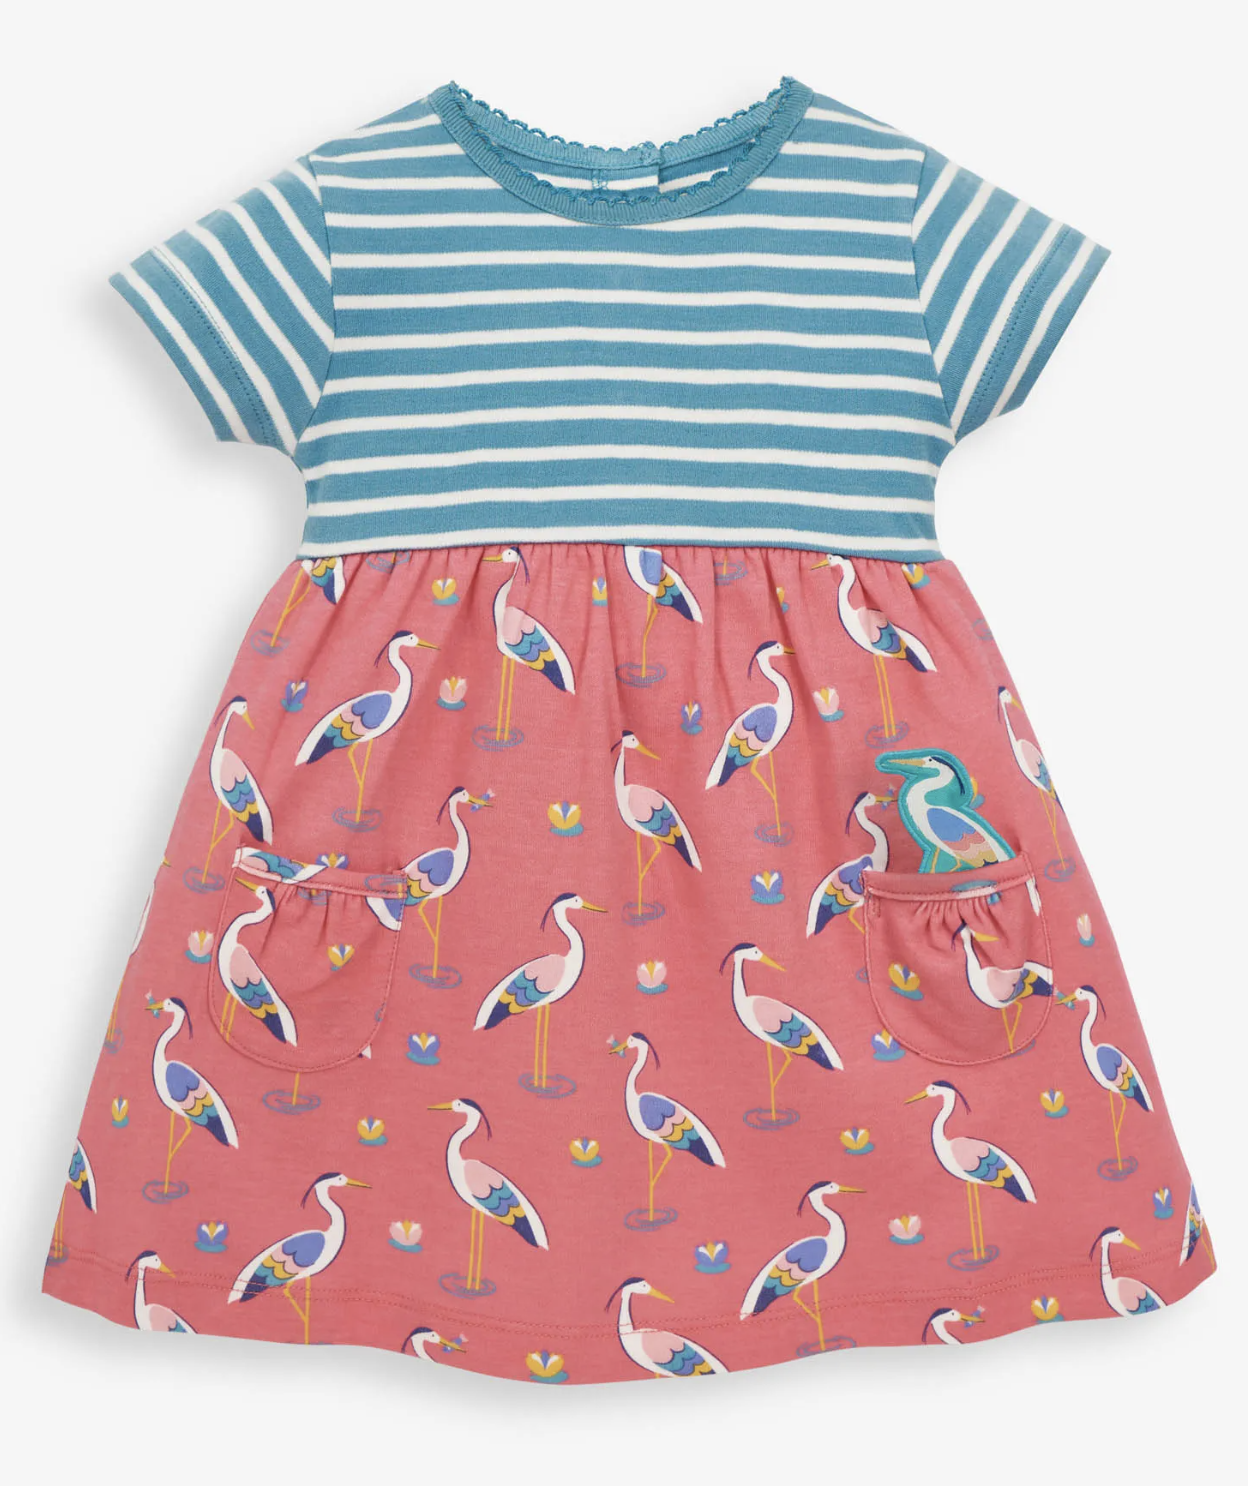 Stripe and Heron Print Dress 12-18 mos